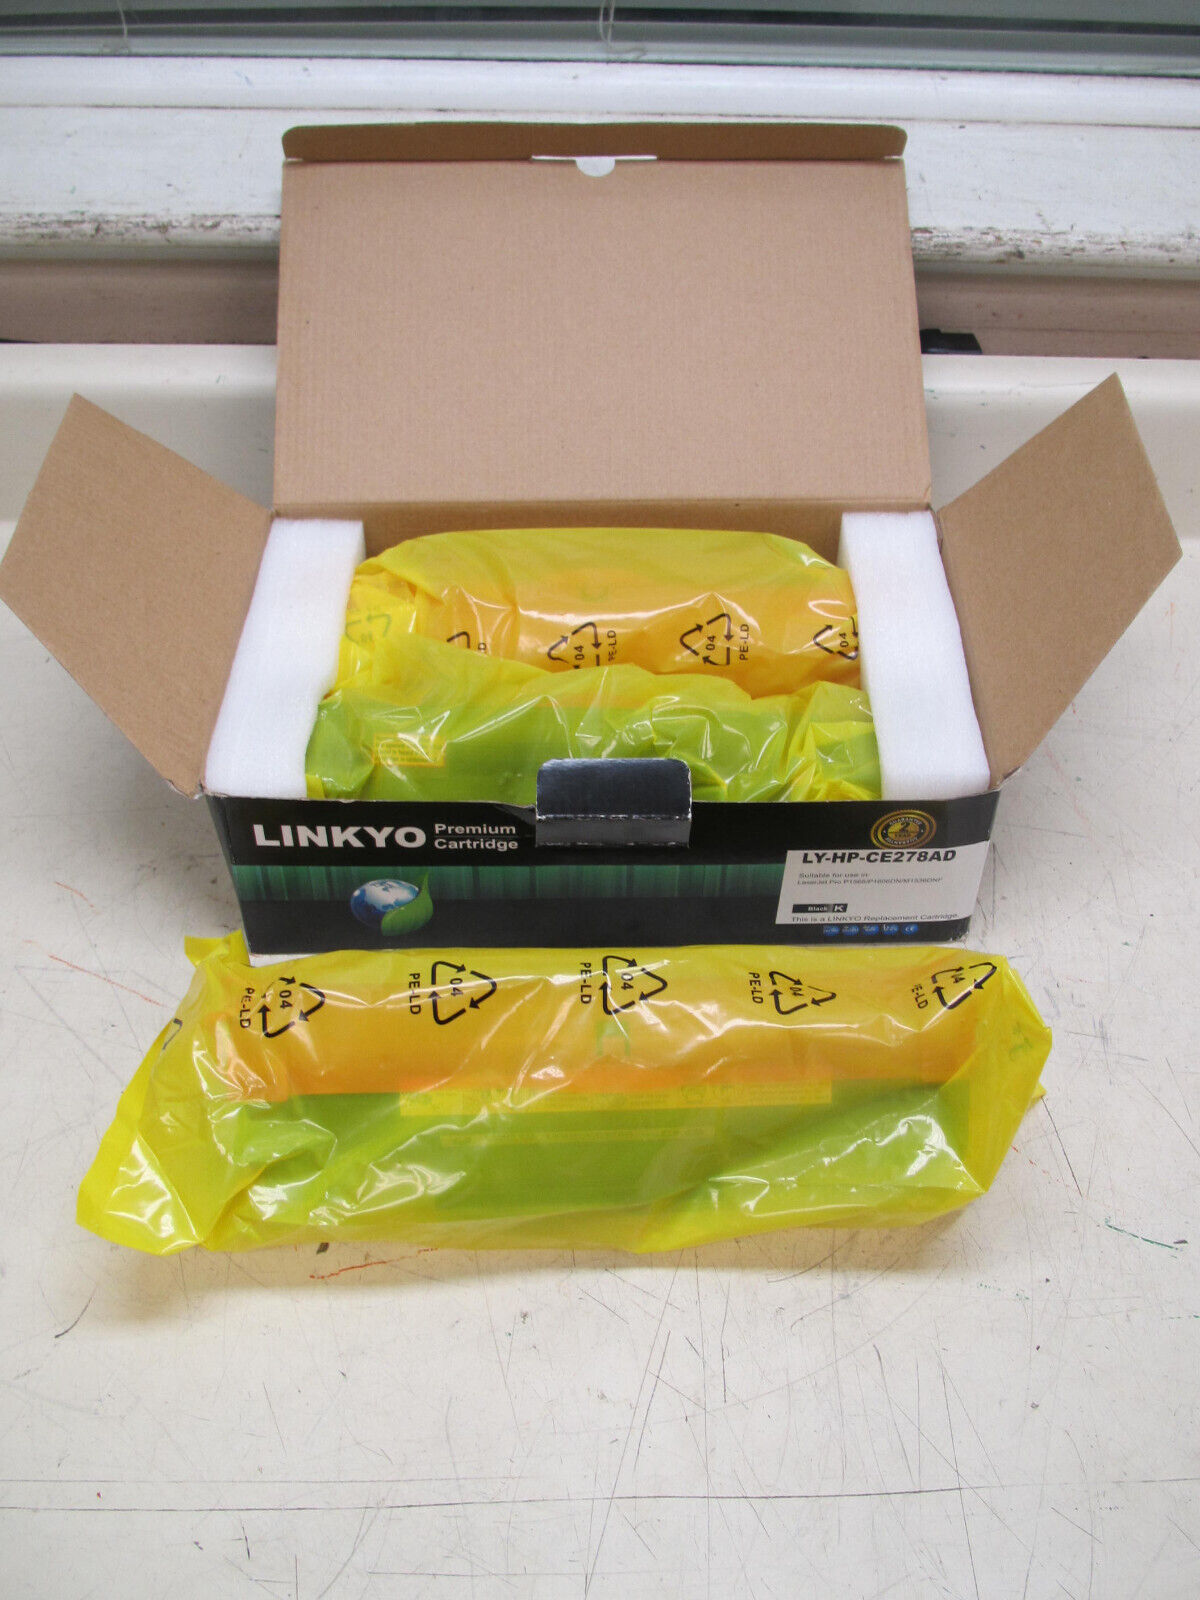 Lot Of 4 Linkyo Replacment Toner Cartridge For HP LaserJet P/N: LY-HP-CE278AD